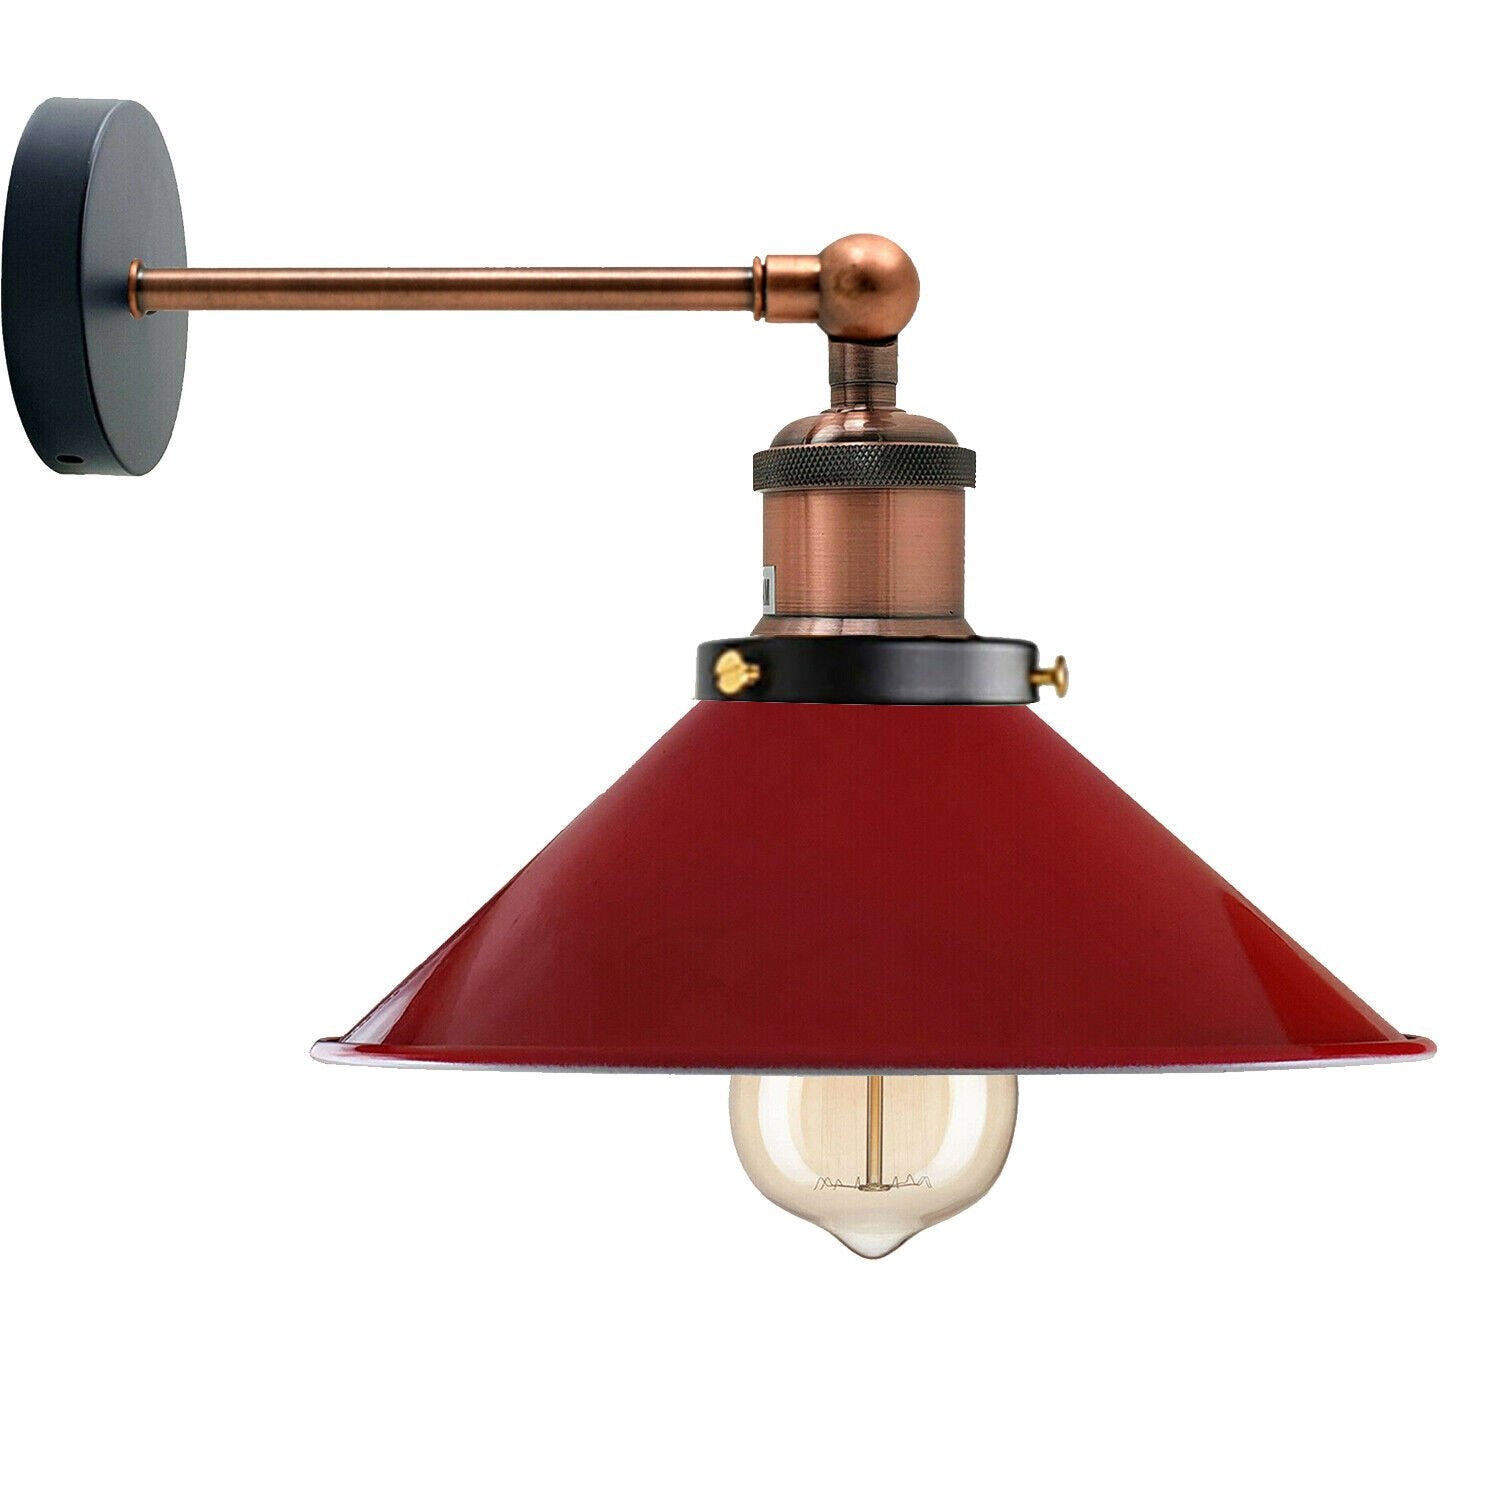 Red Metal Cone Wall Scones Lamp.JPG